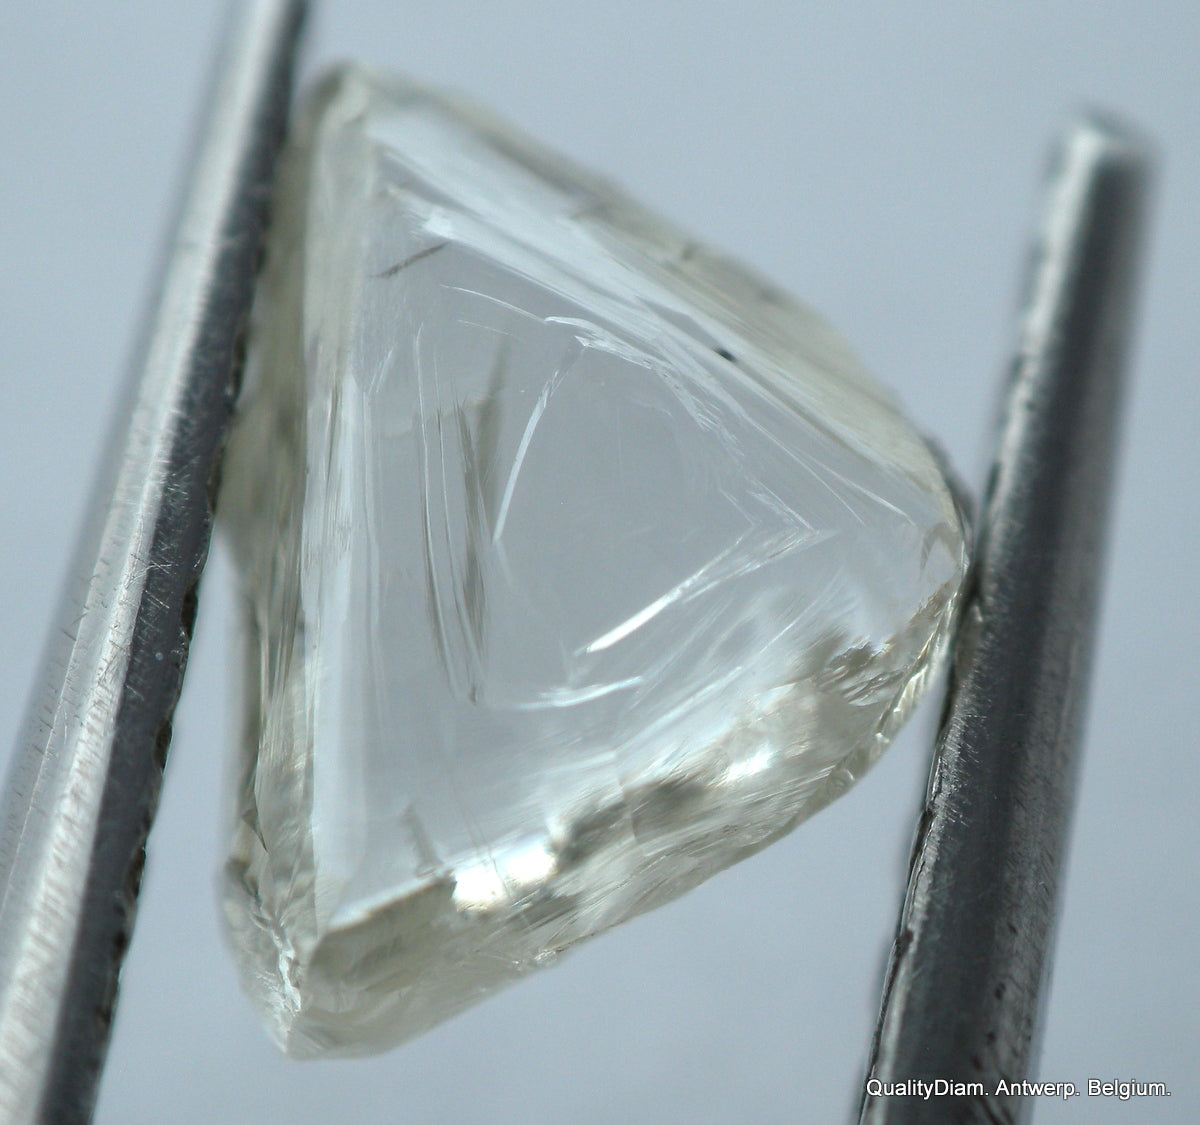 0.94 carat amazing, glassy and triangular rough diamond